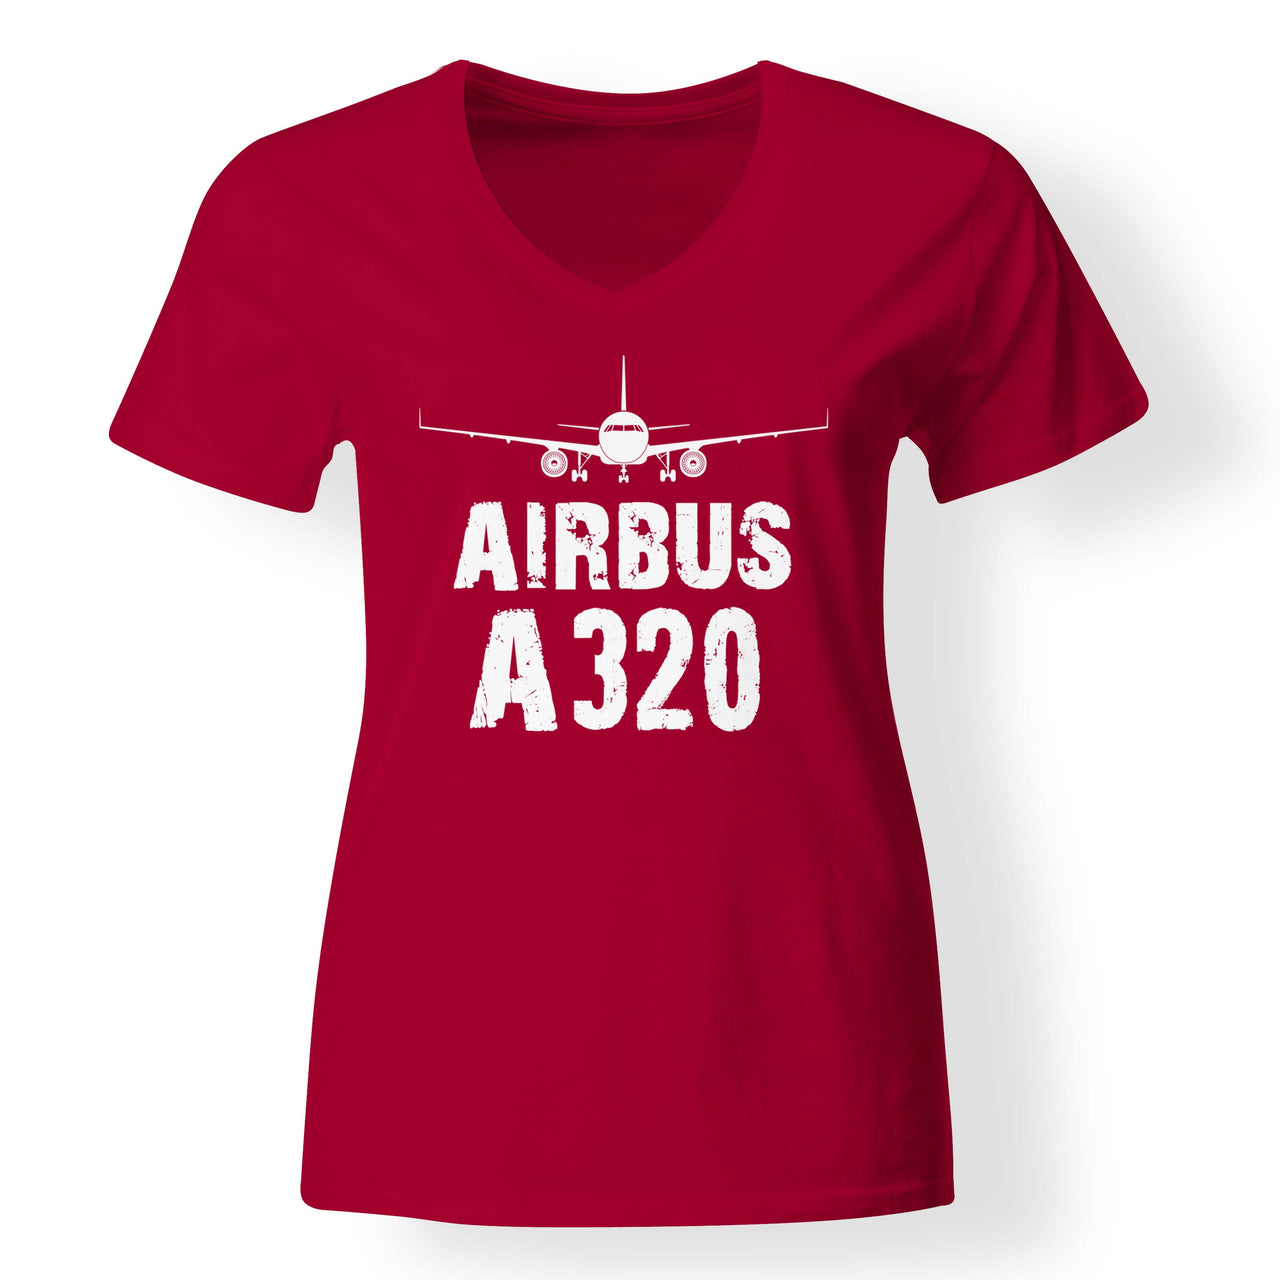 Airbus A320 & Plane Designed V-Neck T-Shirts